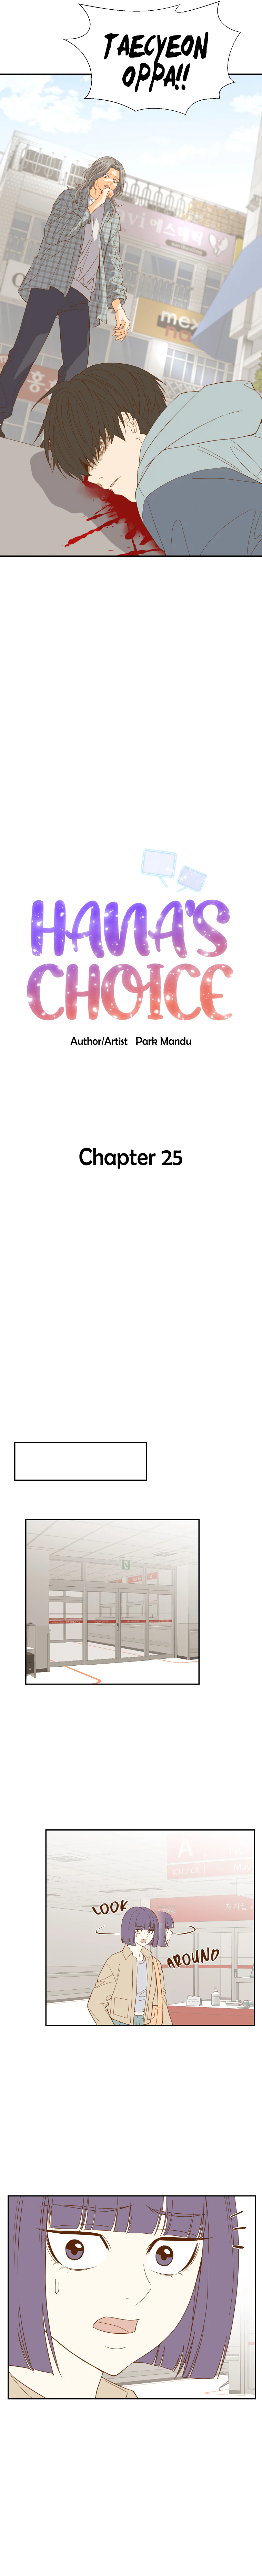 Hana’s Choice Chapter 25 - Page 4